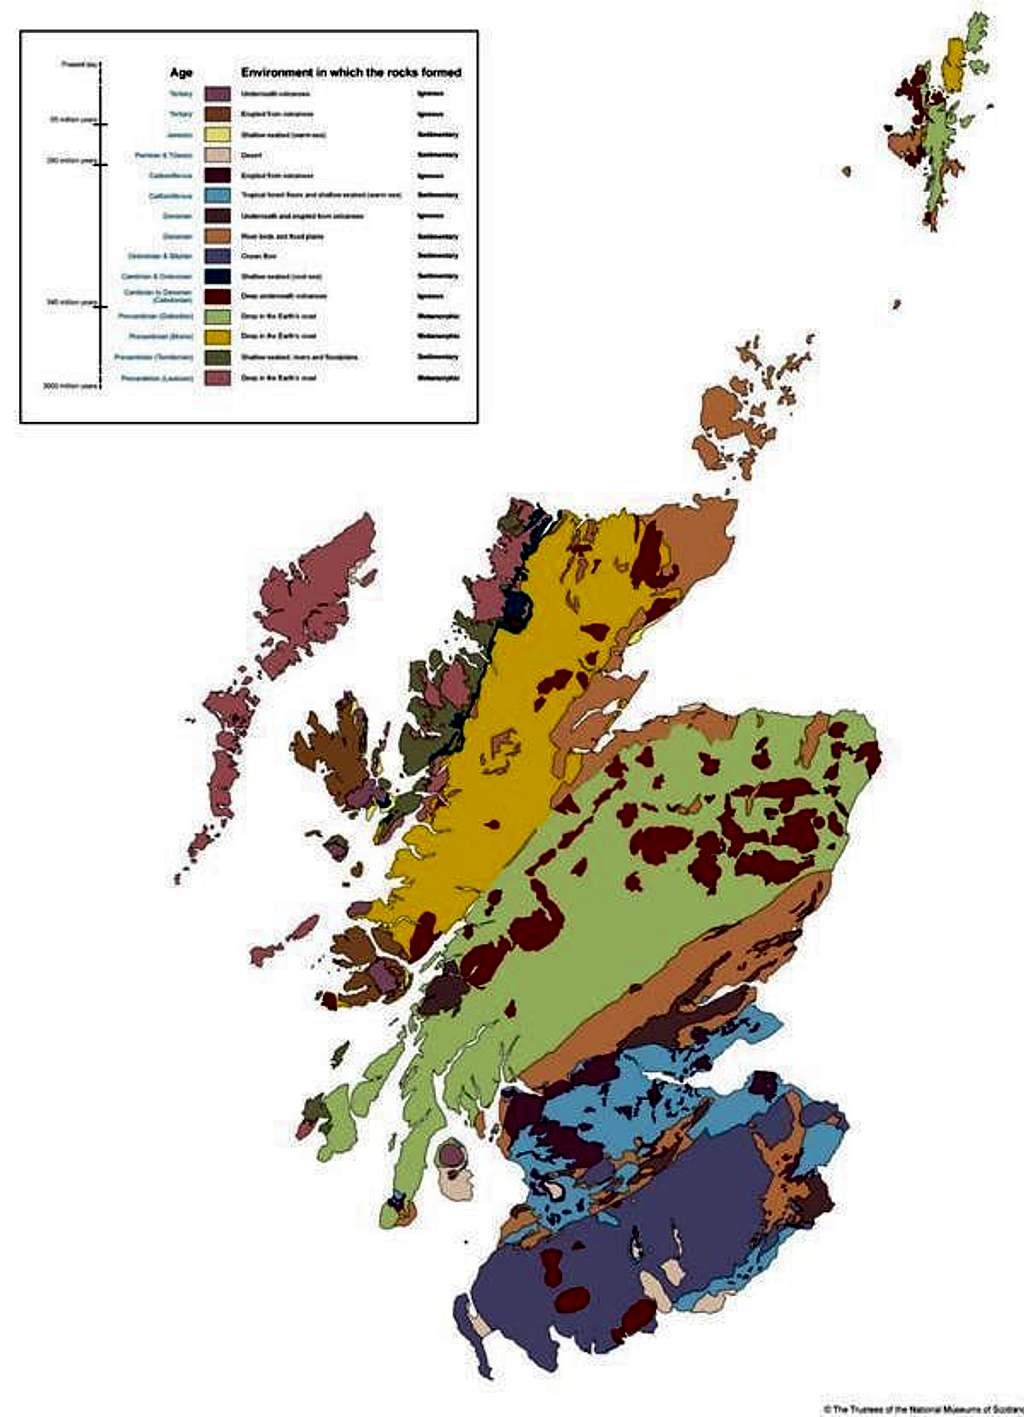 Bedrock Geology of Scotland